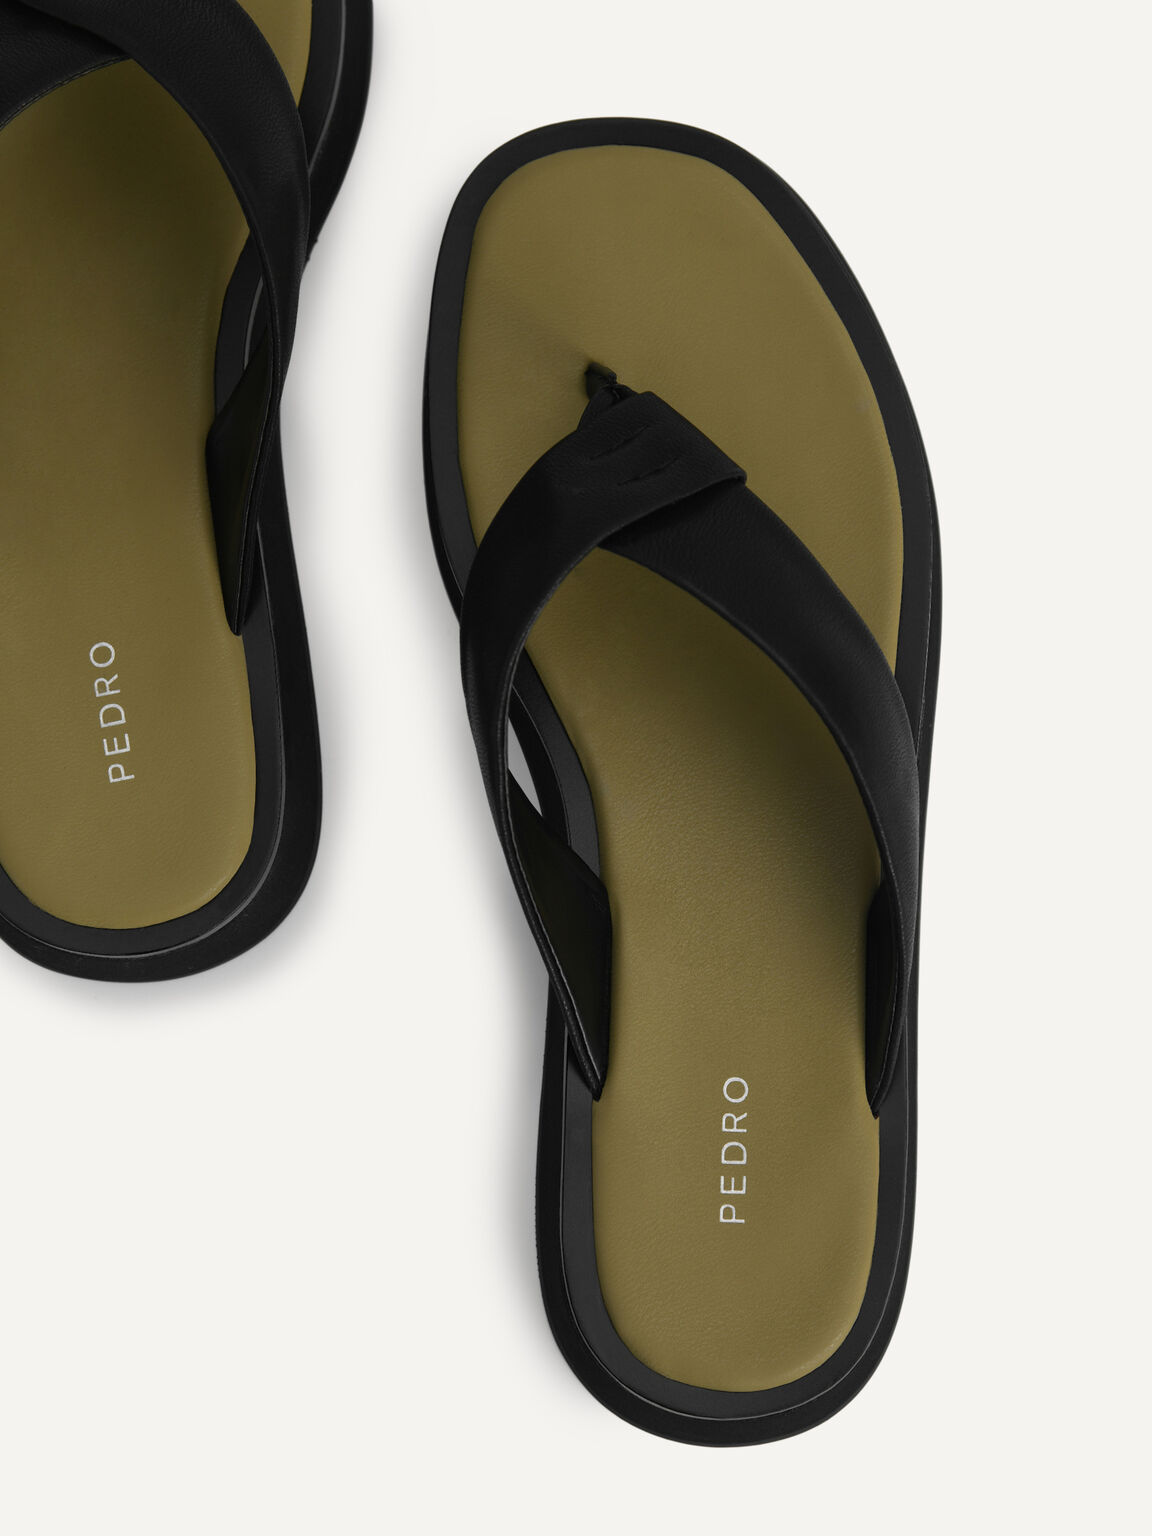 Thong Flatform Sandals, Black